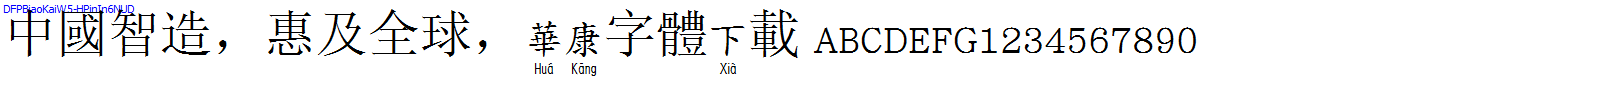 華康字體DFPBiaoKaiW5-HPinIn6NUD.TTF